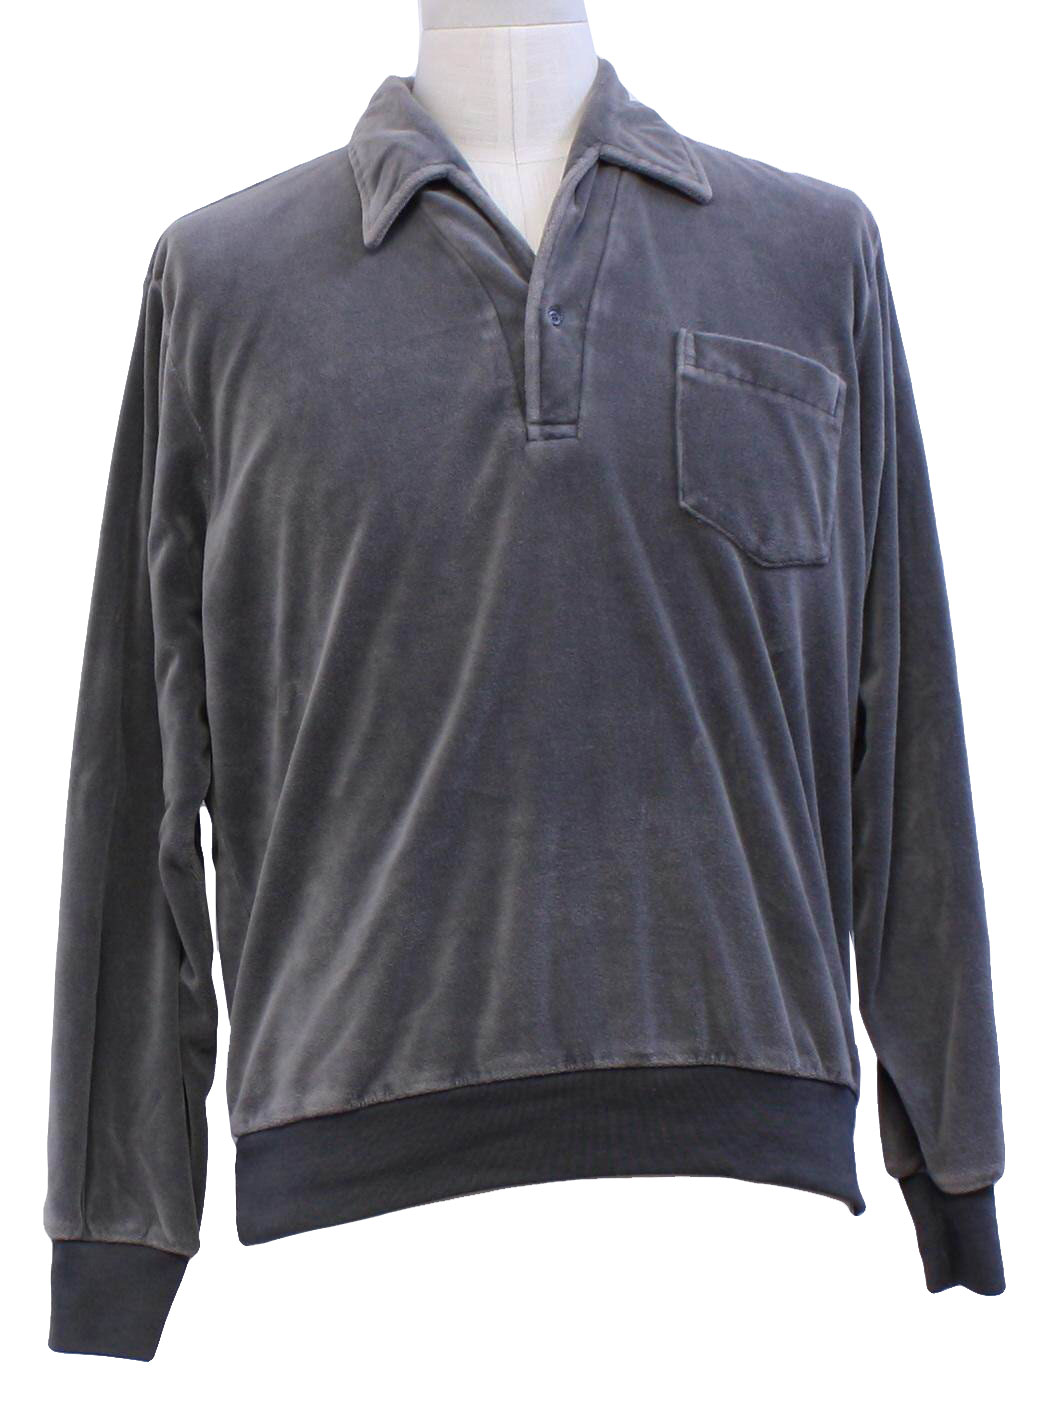 1980's Vintage Ryans Clothing Company Velour Shirt: Early 80s -Ryans ...